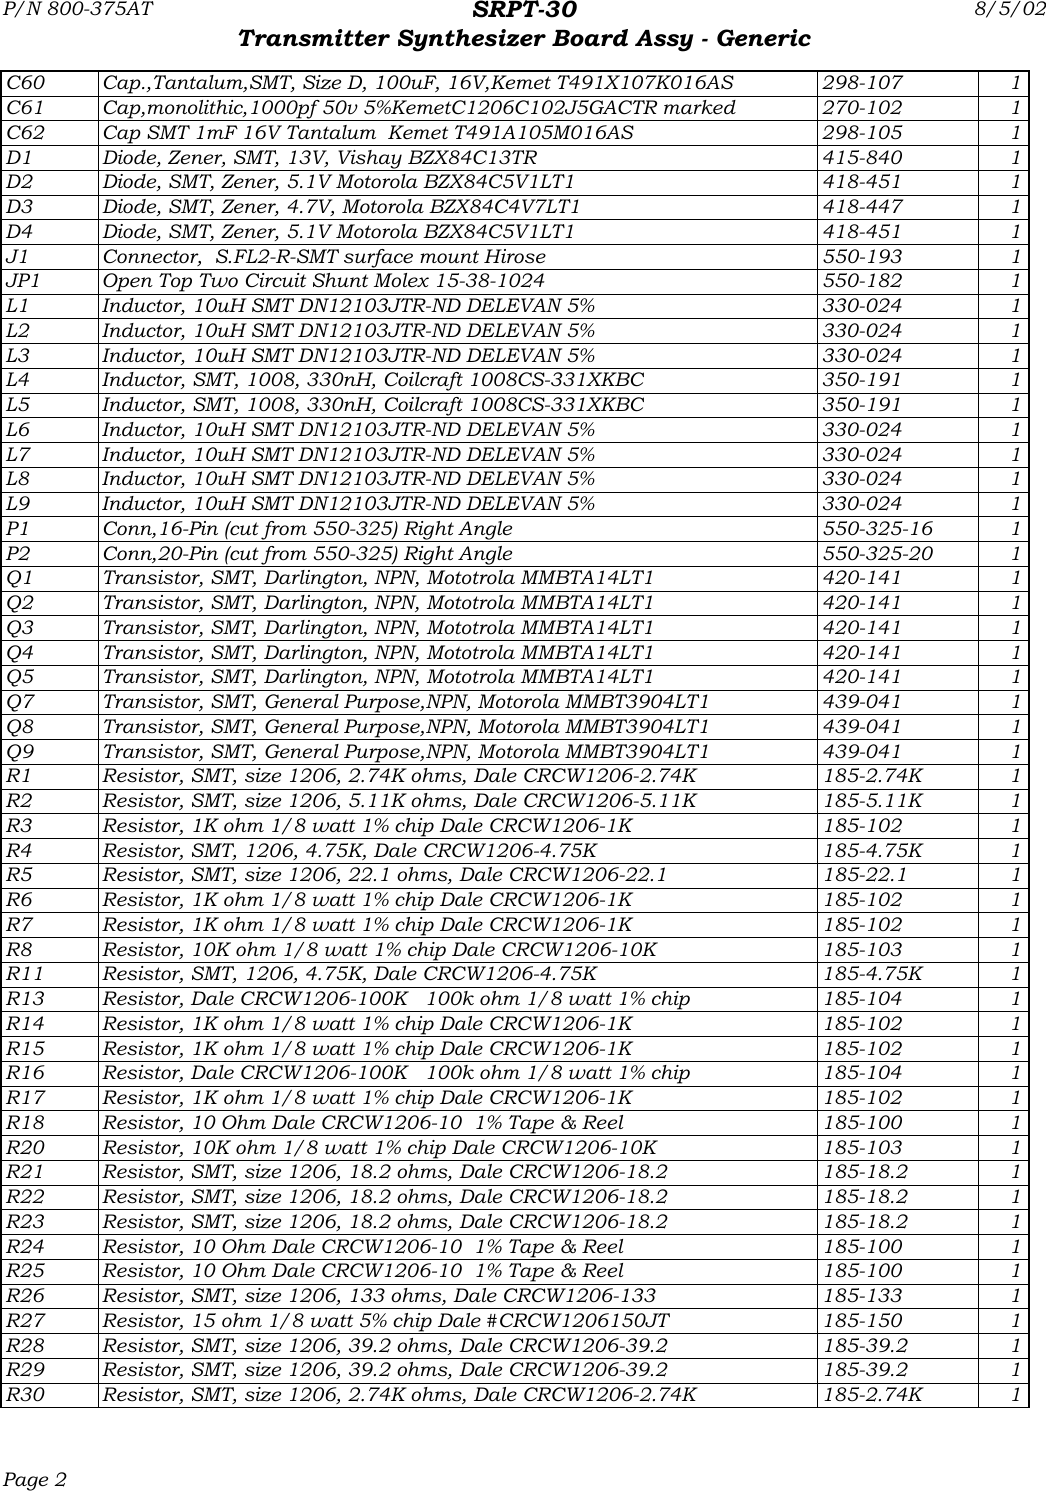 P/N 800-375AT SRPT-30Transmitter Synthesizer Board Assy - Generic8/5/02C60 Cap.,Tantalum,SMT, Size D, 100uF, 16V,Kemet T491X107K016AS 298-107 1C61 Cap,monolithic,1000pf 50v 5%KemetC1206C102J5GACTR marked 270-102 1C62 Cap SMT 1mF 16V Tantalum  Kemet T491A105M016AS 298-105 1D1 Diode, Zener, SMT, 13V, Vishay BZX84C13TR 415-840 1D2 Diode, SMT, Zener, 5.1V Motorola BZX84C5V1LT1 418-451 1D3 Diode, SMT, Zener, 4.7V, Motorola BZX84C4V7LT1 418-447 1D4 Diode, SMT, Zener, 5.1V Motorola BZX84C5V1LT1 418-451 1J1 Connector,  S.FL2-R-SMT surface mount Hirose 550-193 1JP1 Open Top Two Circuit Shunt Molex 15-38-1024 550-182 1L1 Inductor, 10uH SMT DN12103JTR-ND DELEVAN 5% 330-024 1L2 Inductor, 10uH SMT DN12103JTR-ND DELEVAN 5% 330-024 1L3 Inductor, 10uH SMT DN12103JTR-ND DELEVAN 5% 330-024 1L4 Inductor, SMT, 1008, 330nH, Coilcraft 1008CS-331XKBC 350-191 1L5 Inductor, SMT, 1008, 330nH, Coilcraft 1008CS-331XKBC 350-191 1L6 Inductor, 10uH SMT DN12103JTR-ND DELEVAN 5% 330-024 1L7 Inductor, 10uH SMT DN12103JTR-ND DELEVAN 5% 330-024 1L8 Inductor, 10uH SMT DN12103JTR-ND DELEVAN 5% 330-024 1L9 Inductor, 10uH SMT DN12103JTR-ND DELEVAN 5% 330-024 1P1 Conn,16-Pin (cut from 550-325) Right Angle 550-325-16 1P2 Conn,20-Pin (cut from 550-325) Right Angle 550-325-20 1Q1 Transistor, SMT, Darlington, NPN, Mototrola MMBTA14LT1 420-141 1Q2 Transistor, SMT, Darlington, NPN, Mototrola MMBTA14LT1 420-141 1Q3 Transistor, SMT, Darlington, NPN, Mototrola MMBTA14LT1 420-141 1Q4 Transistor, SMT, Darlington, NPN, Mototrola MMBTA14LT1 420-141 1Q5 Transistor, SMT, Darlington, NPN, Mototrola MMBTA14LT1 420-141 1Q7 Transistor, SMT, General Purpose,NPN, Motorola MMBT3904LT1 439-041 1Q8 Transistor, SMT, General Purpose,NPN, Motorola MMBT3904LT1 439-041 1Q9 Transistor, SMT, General Purpose,NPN, Motorola MMBT3904LT1 439-041 1R1 Resistor, SMT, size 1206, 2.74K ohms, Dale CRCW1206-2.74K 185-2.74K 1R2 Resistor, SMT, size 1206, 5.11K ohms, Dale CRCW1206-5.11K 185-5.11K 1R3 Resistor, 1K ohm 1/8 watt 1% chip Dale CRCW1206-1K 185-102 1R4 Resistor, SMT, 1206, 4.75K, Dale CRCW1206-4.75K 185-4.75K 1R5 Resistor, SMT, size 1206, 22.1 ohms, Dale CRCW1206-22.1 185-22.1 1R6 Resistor, 1K ohm 1/8 watt 1% chip Dale CRCW1206-1K 185-102 1R7 Resistor, 1K ohm 1/8 watt 1% chip Dale CRCW1206-1K 185-102 1R8 Resistor, 10K ohm 1/8 watt 1% chip Dale CRCW1206-10K 185-103 1R11 Resistor, SMT, 1206, 4.75K, Dale CRCW1206-4.75K 185-4.75K 1R13 Resistor, Dale CRCW1206-100K   100k ohm 1/8 watt 1% chip 185-104 1R14 Resistor, 1K ohm 1/8 watt 1% chip Dale CRCW1206-1K 185-102 1R15 Resistor, 1K ohm 1/8 watt 1% chip Dale CRCW1206-1K 185-102 1R16 Resistor, Dale CRCW1206-100K   100k ohm 1/8 watt 1% chip 185-104 1R17 Resistor, 1K ohm 1/8 watt 1% chip Dale CRCW1206-1K 185-102 1R18 Resistor, 10 Ohm Dale CRCW1206-10  1% Tape &amp; Reel 185-100 1R20 Resistor, 10K ohm 1/8 watt 1% chip Dale CRCW1206-10K 185-103 1R21 Resistor, SMT, size 1206, 18.2 ohms, Dale CRCW1206-18.2 185-18.2 1R22 Resistor, SMT, size 1206, 18.2 ohms, Dale CRCW1206-18.2 185-18.2 1R23 Resistor, SMT, size 1206, 18.2 ohms, Dale CRCW1206-18.2 185-18.2 1R24 Resistor, 10 Ohm Dale CRCW1206-10  1% Tape &amp; Reel 185-100 1R25 Resistor, 10 Ohm Dale CRCW1206-10  1% Tape &amp; Reel 185-100 1R26 Resistor, SMT, size 1206, 133 ohms, Dale CRCW1206-133 185-133 1R27 Resistor, 15 ohm 1/8 watt 5% chip Dale #CRCW1206150JT 185-150 1R28 Resistor, SMT, size 1206, 39.2 ohms, Dale CRCW1206-39.2 185-39.2 1R29 Resistor, SMT, size 1206, 39.2 ohms, Dale CRCW1206-39.2 185-39.2 1R30 Resistor, SMT, size 1206, 2.74K ohms, Dale CRCW1206-2.74K 185-2.74K 1Page 2